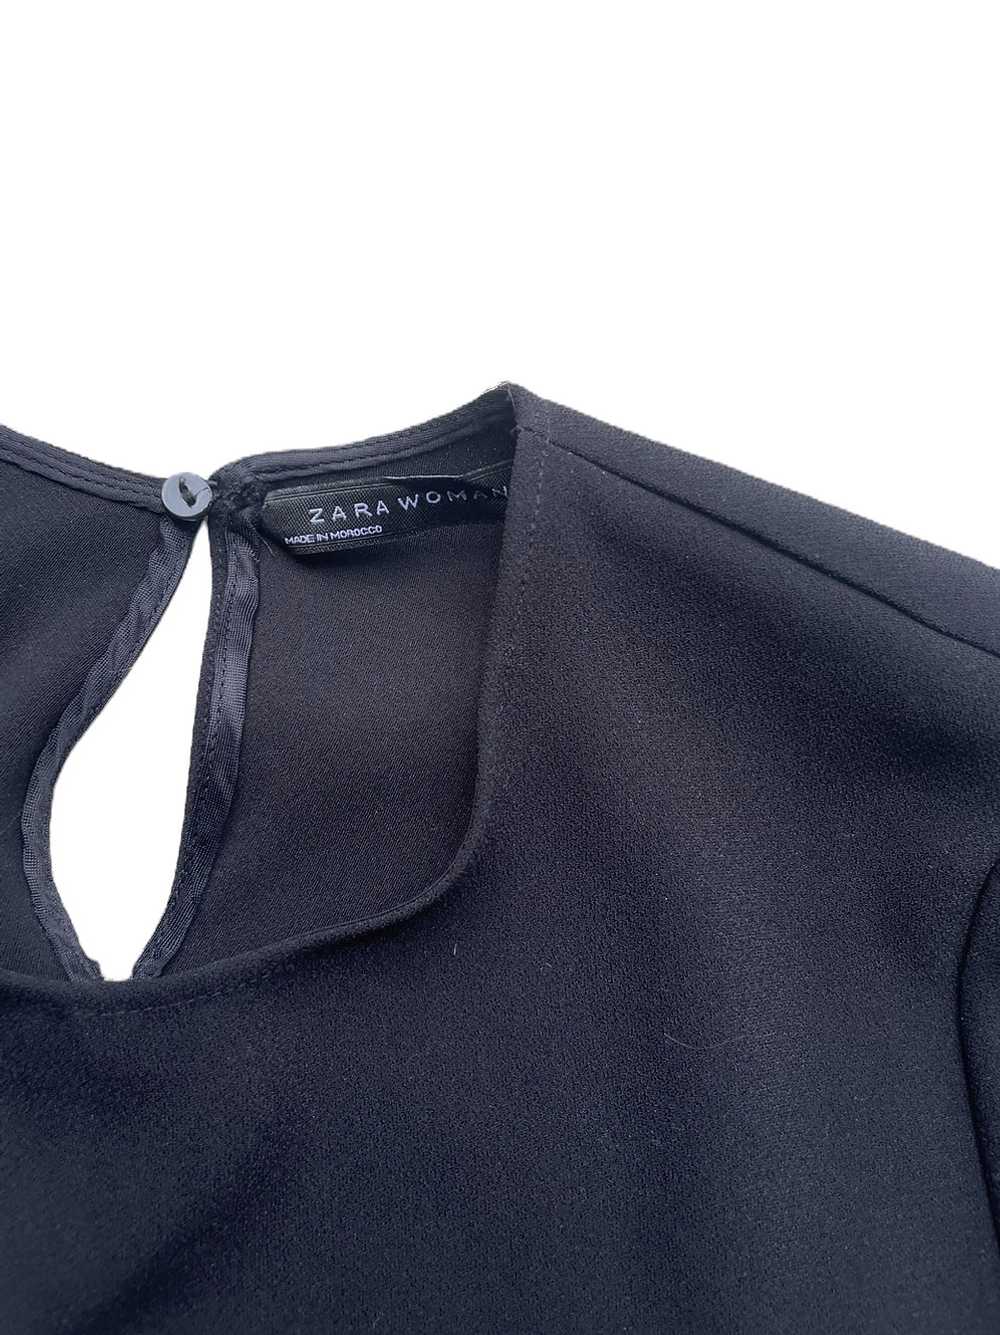 Zara Peplum Black Crepe Blouse S - image 3